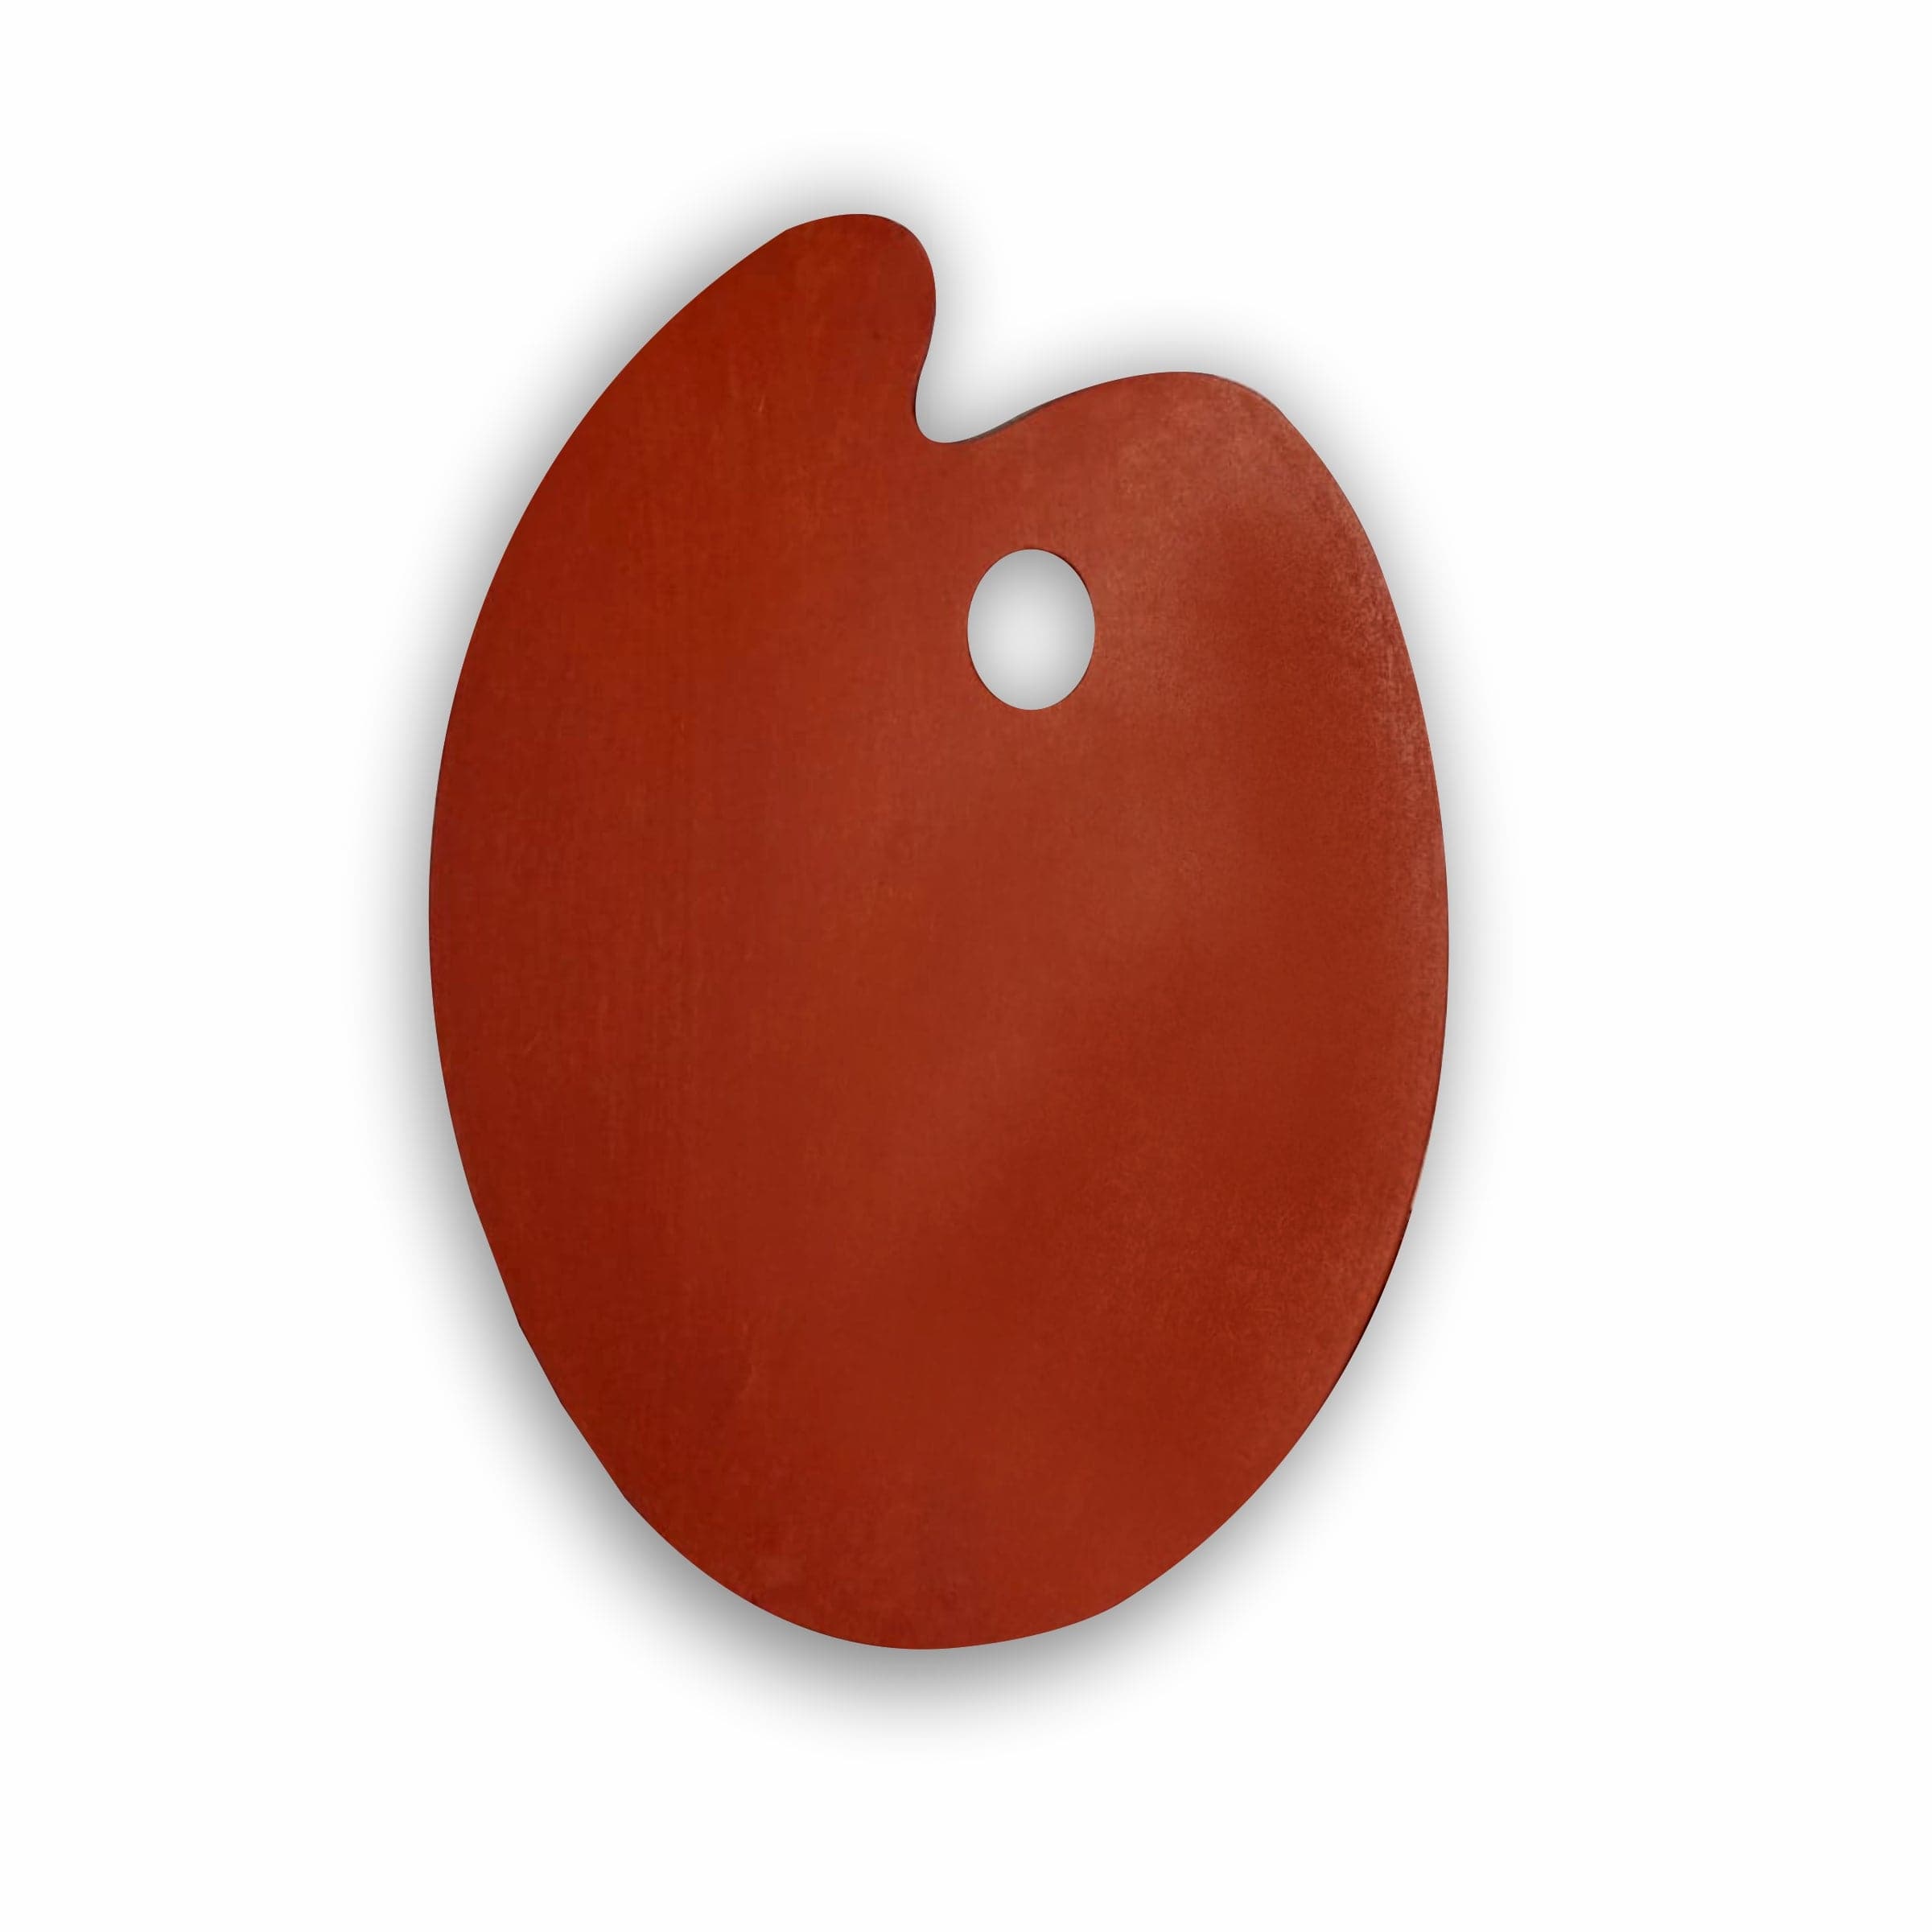 Wooden Colour Mixing Palette Oval Shape